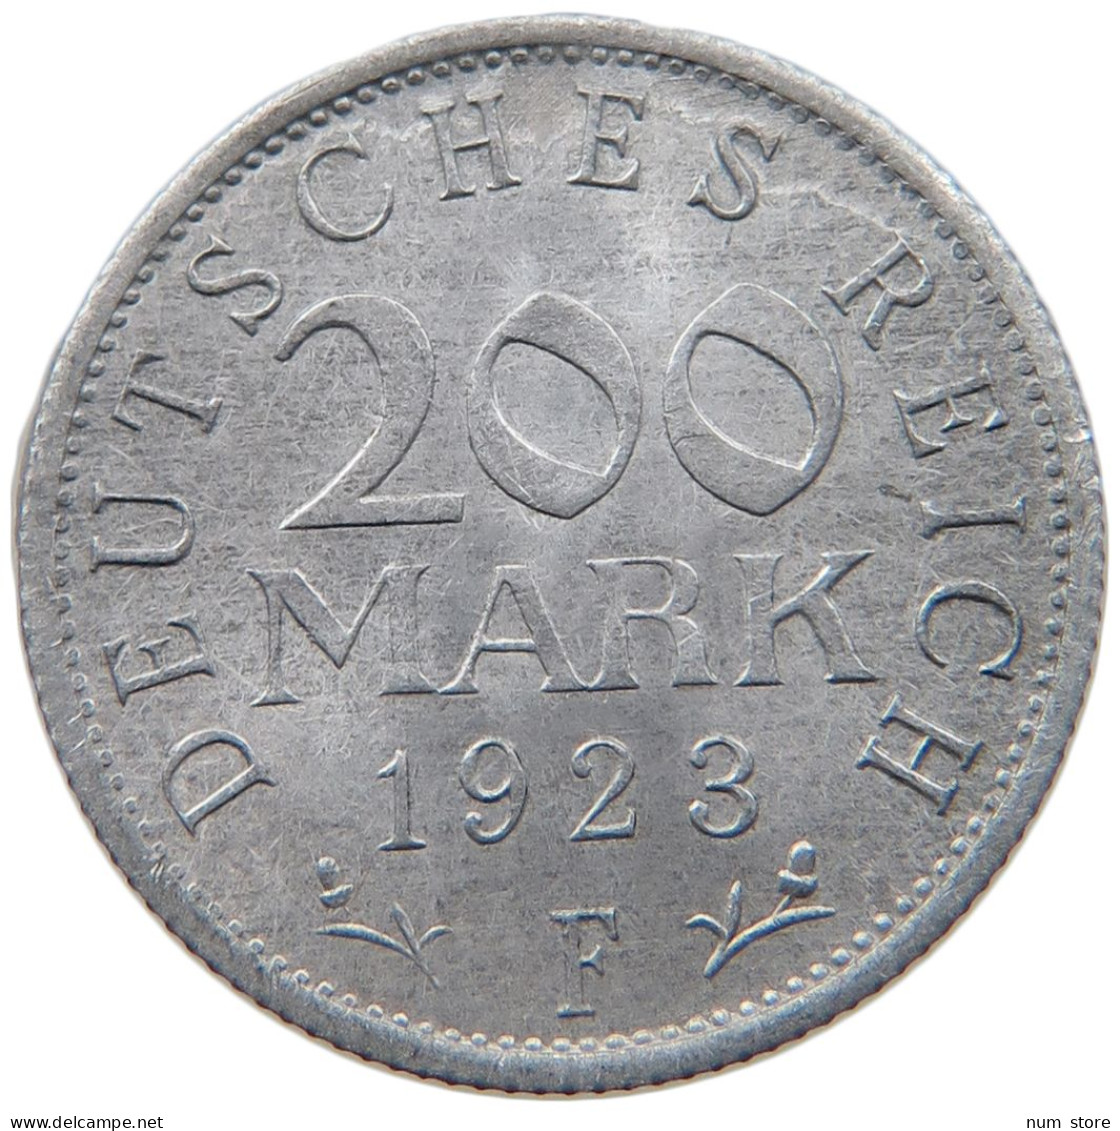 WEIMARER REPUBLIK 200 MARK 1923 F  #MA 098790 - 200 & 500 Mark